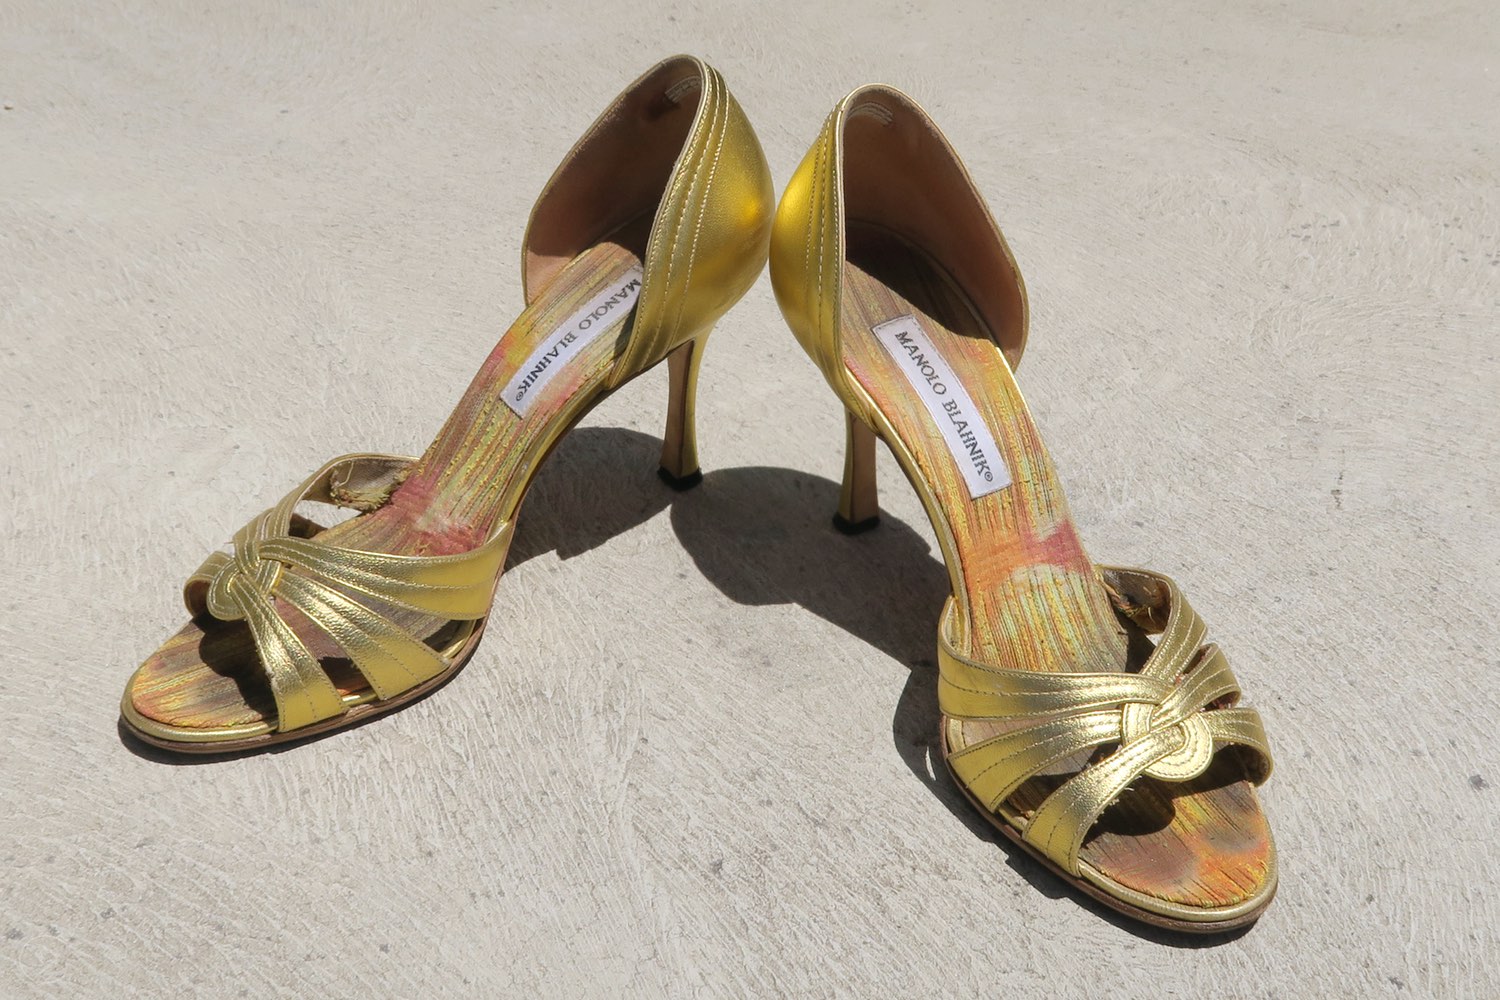 gold manolo blahnik shoes